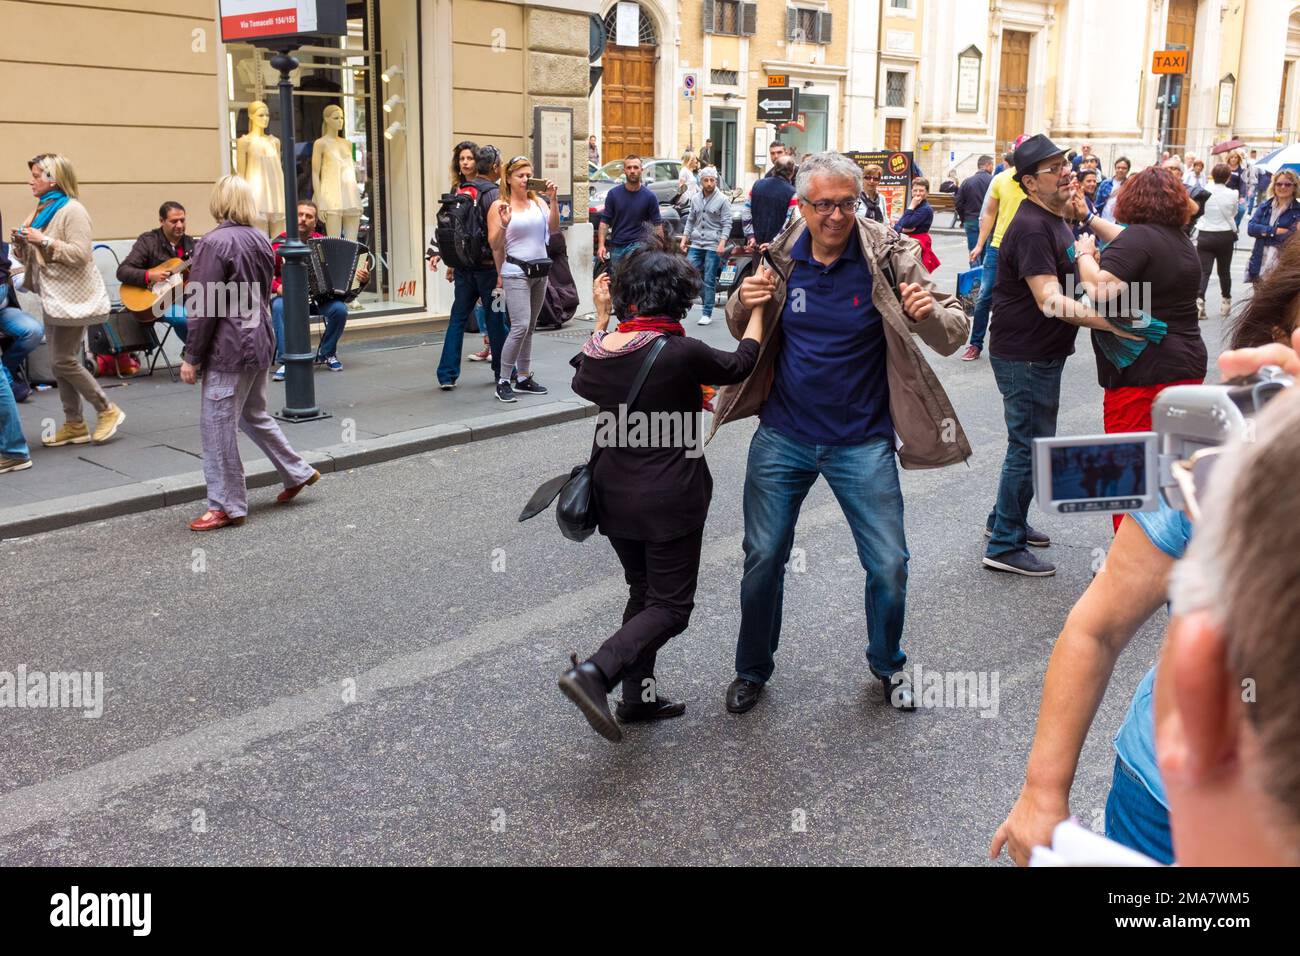 People in Rome the Italian capital, dancing in the street Stock Photo